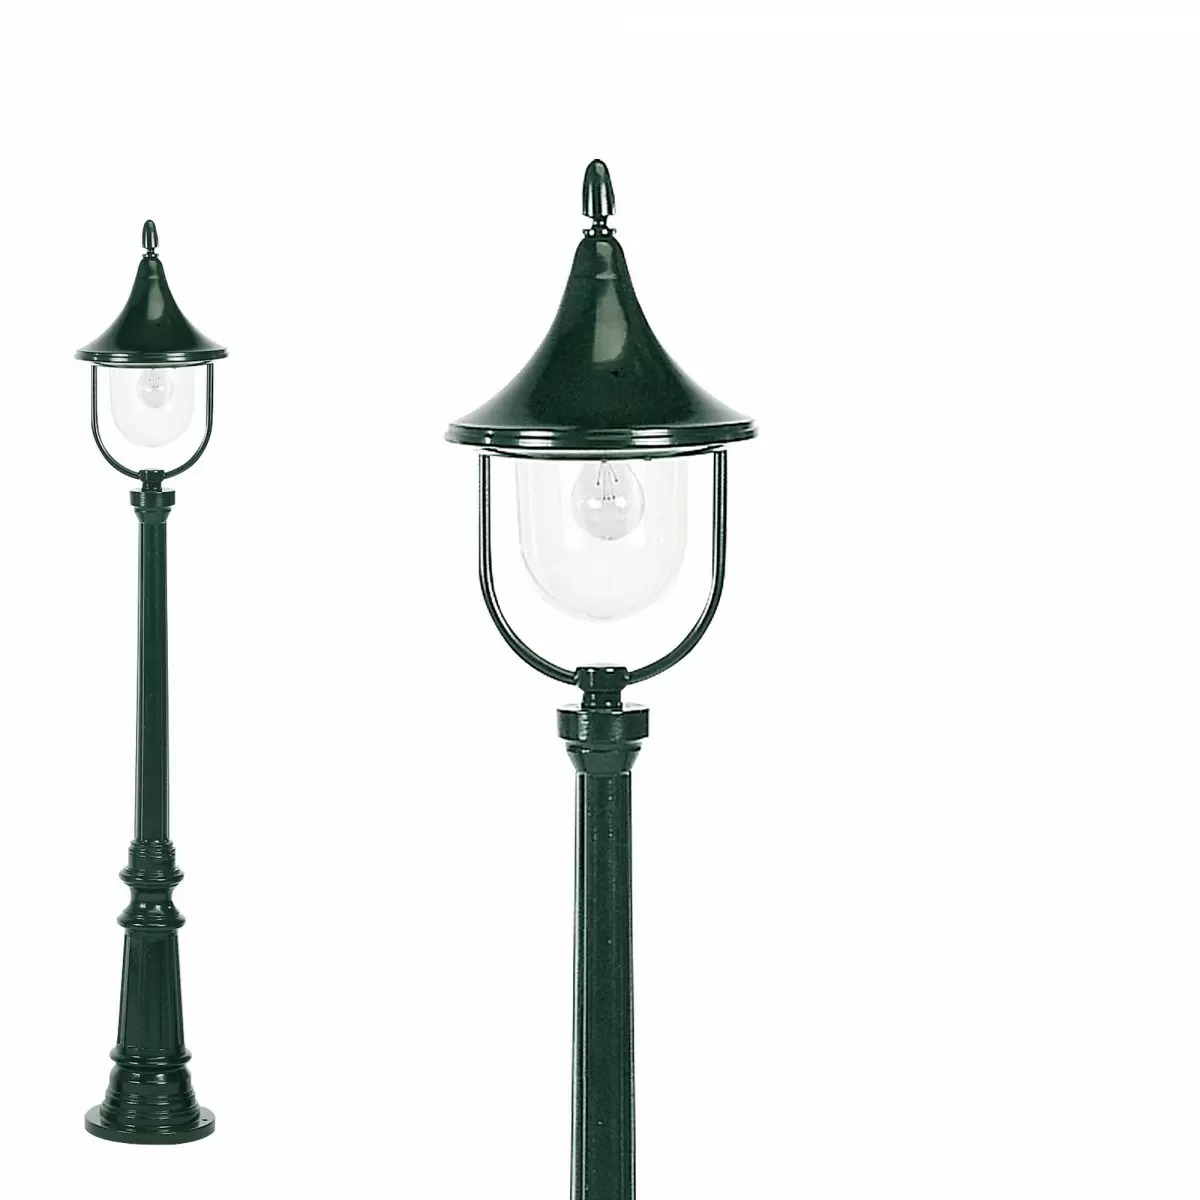 lamp post Ravenna | Official KS outdoor lighting company